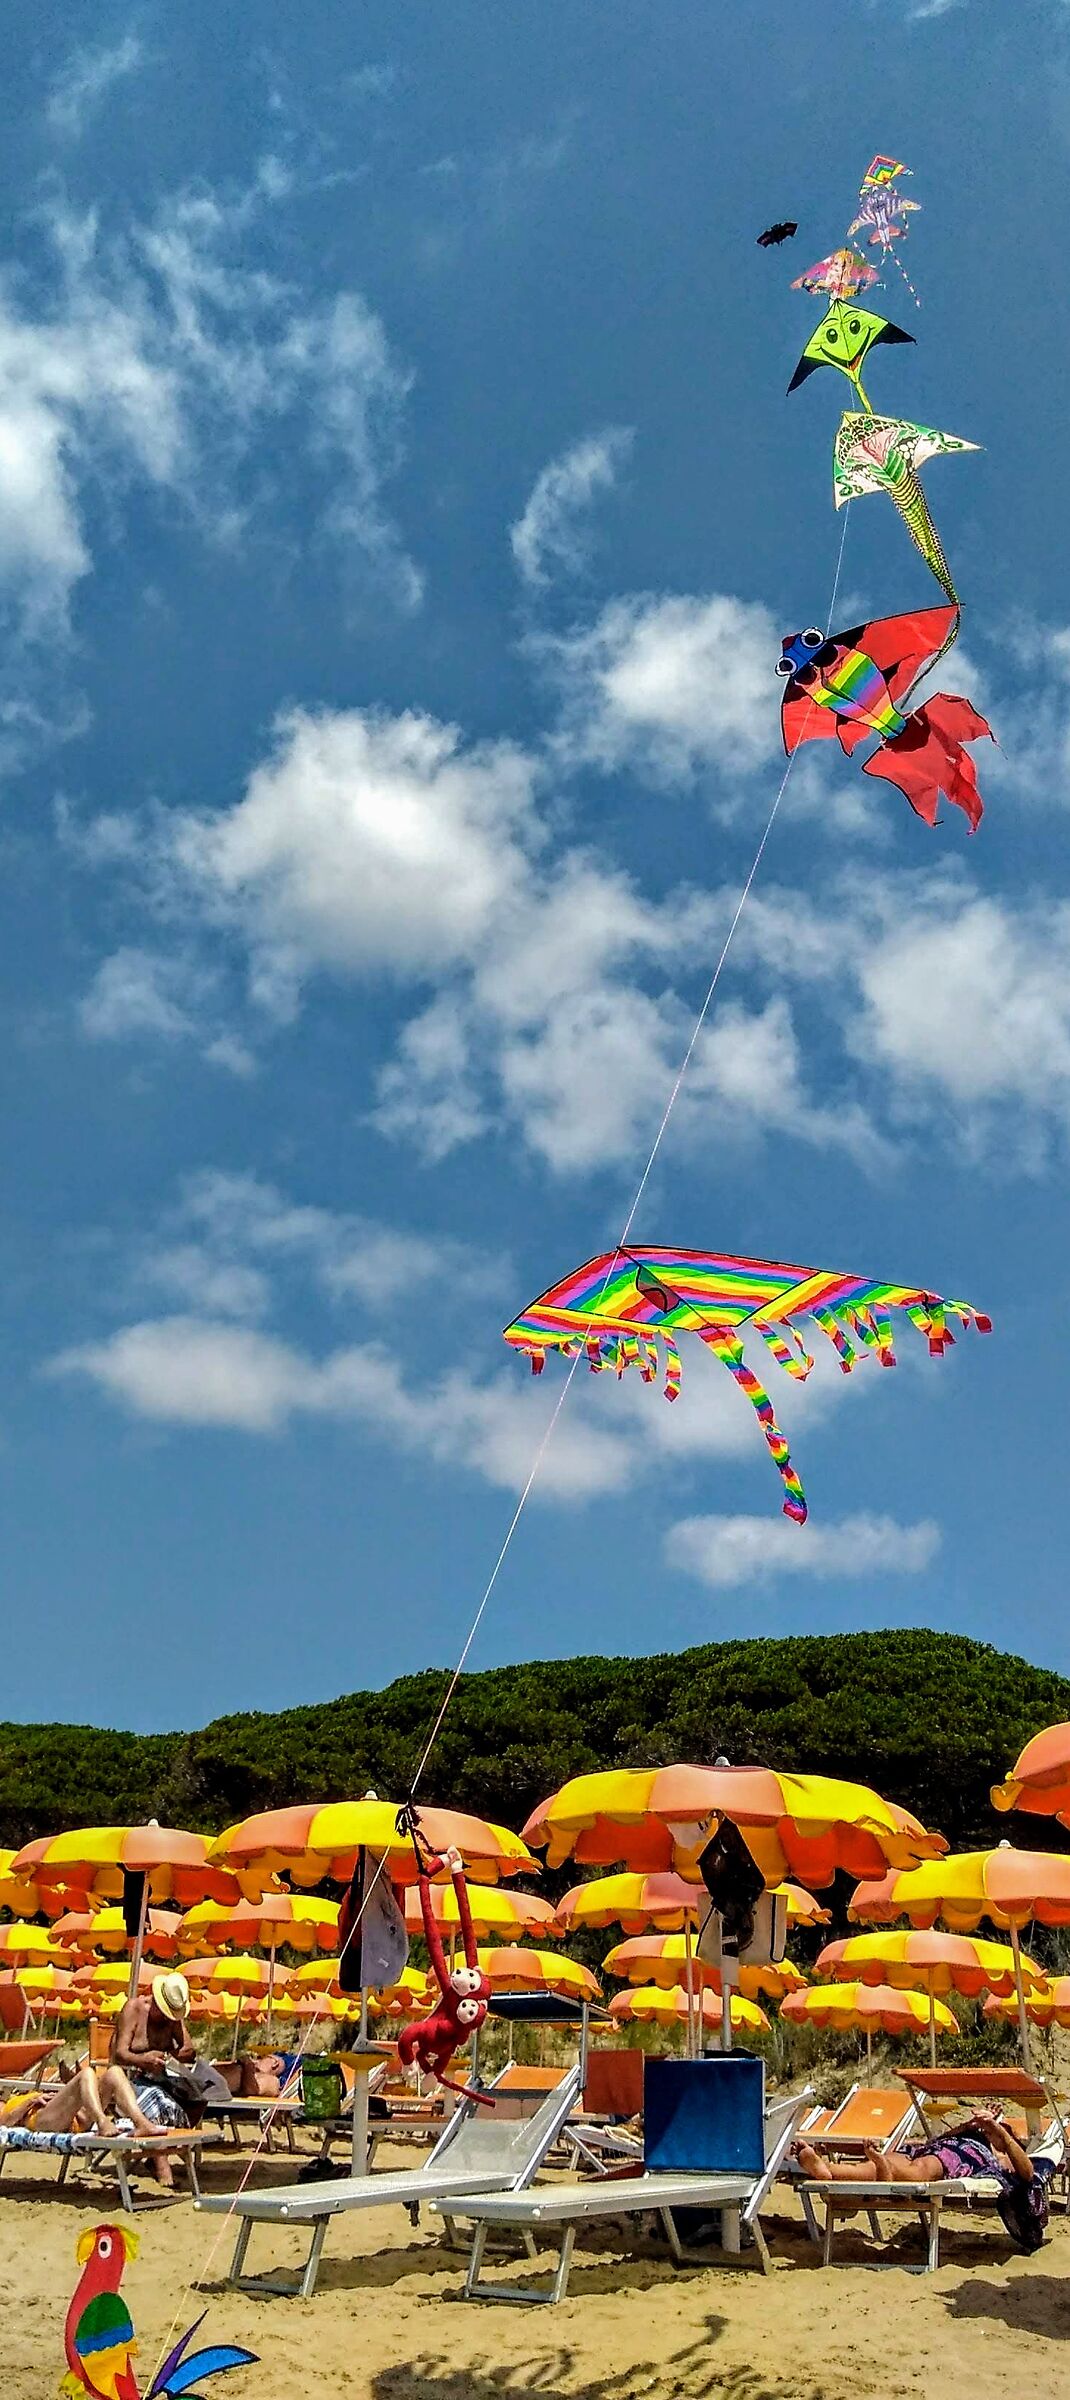 Kites in Summer...